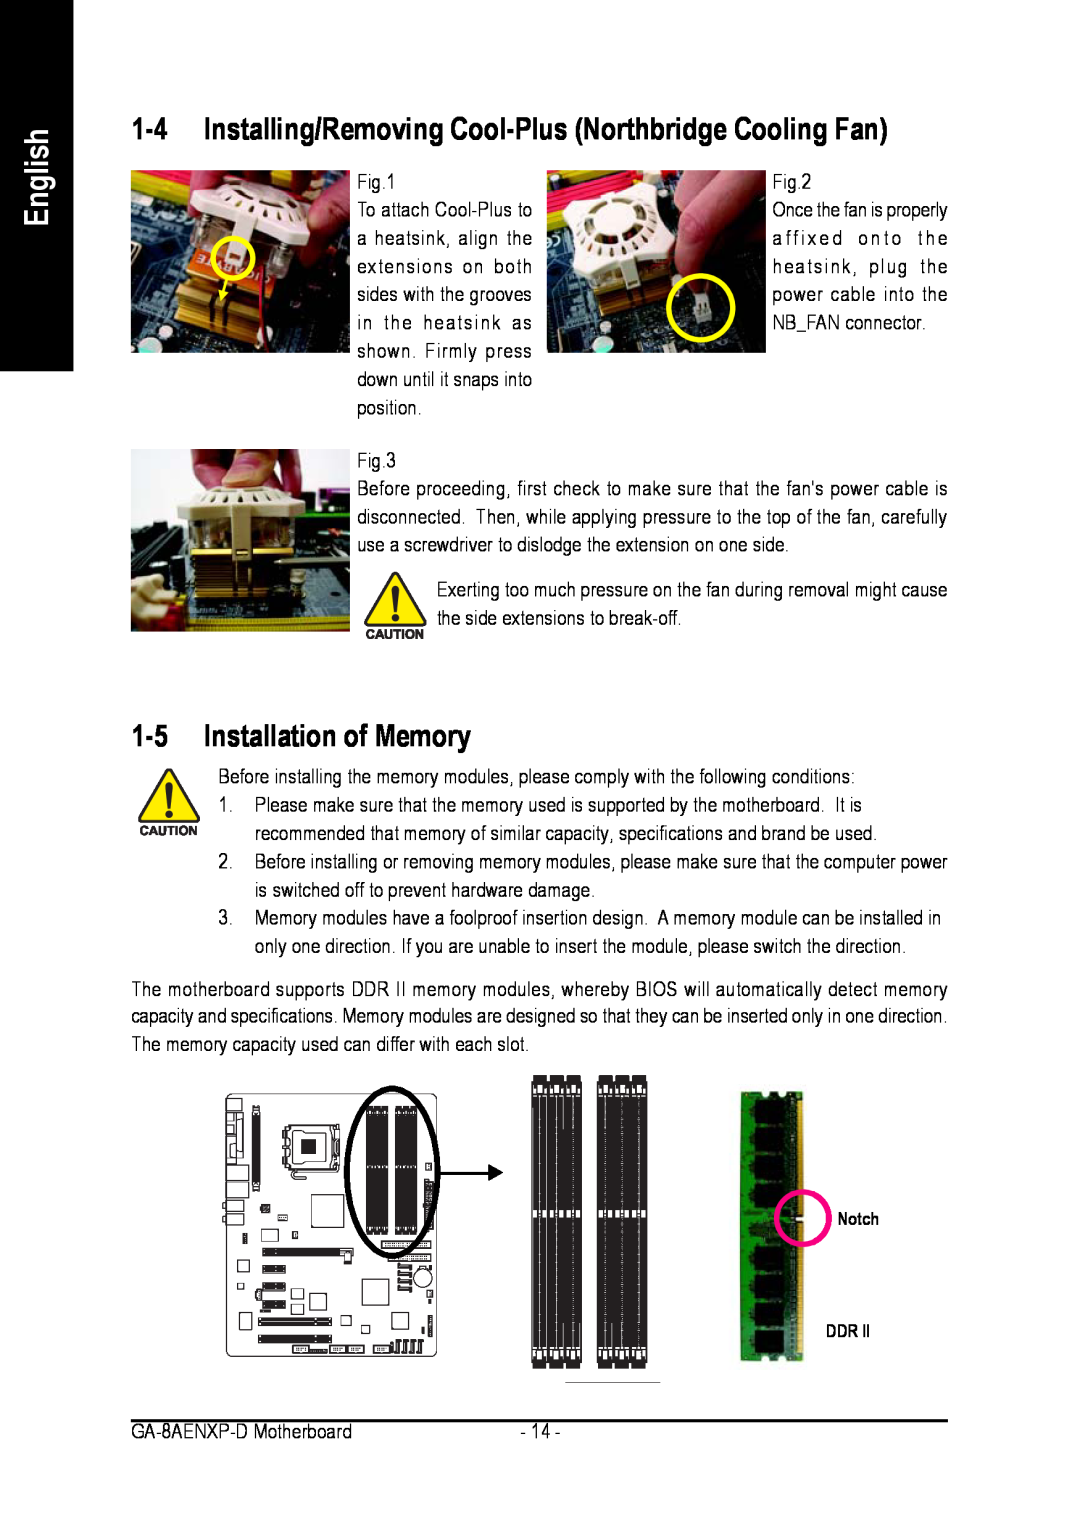 Gigabyte GA-8AENXP-D user manual Installing/Removing Cool-Plus Northbridge Cooling Fan, Installation of Memory, English 